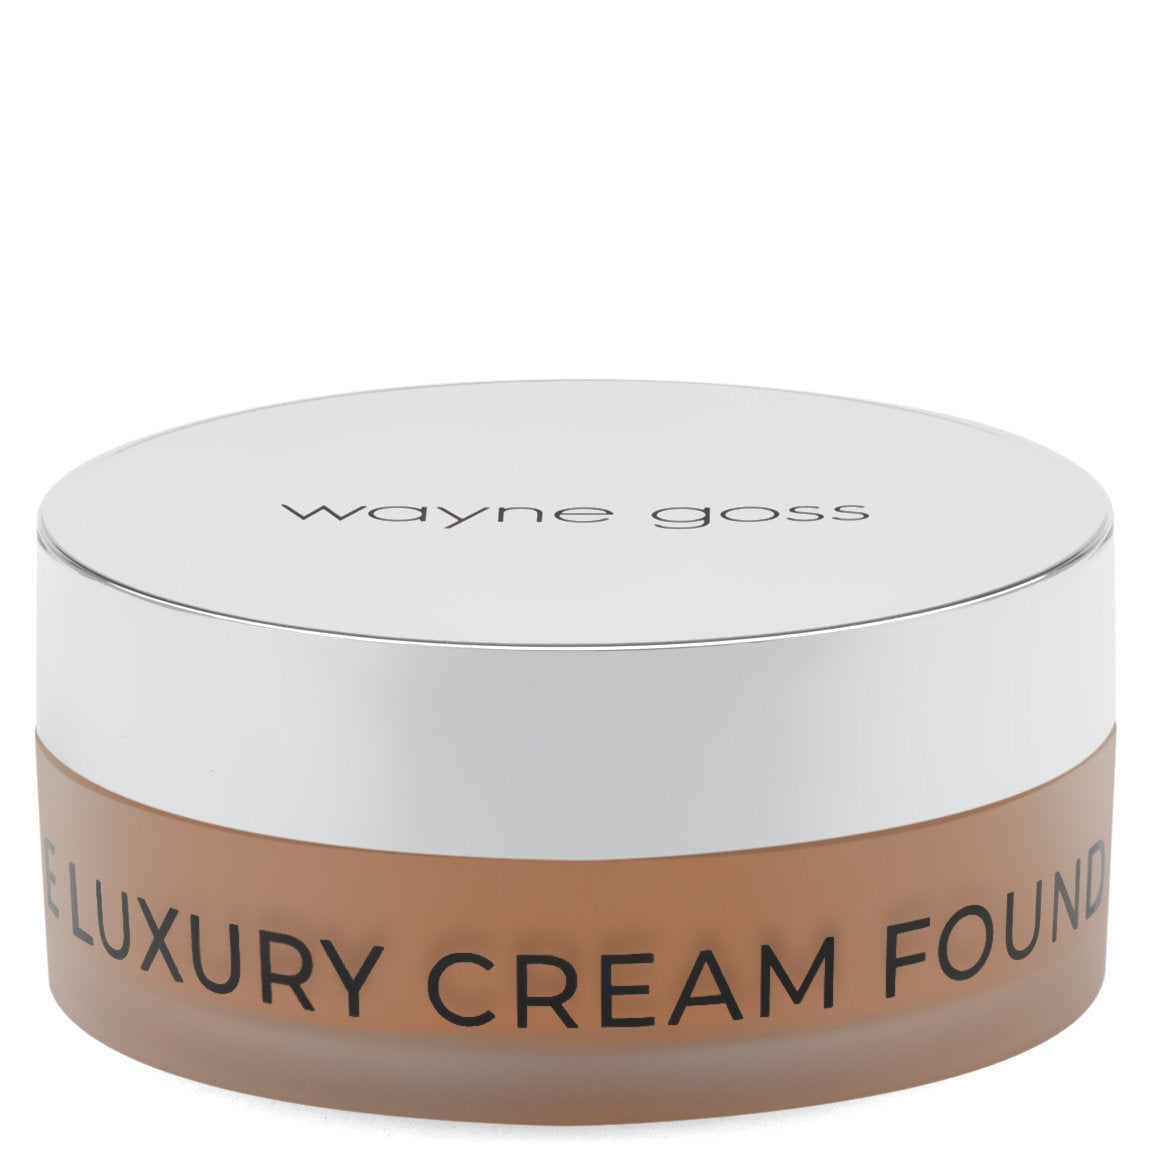 The Luxury Cream Foundation - Shade 06